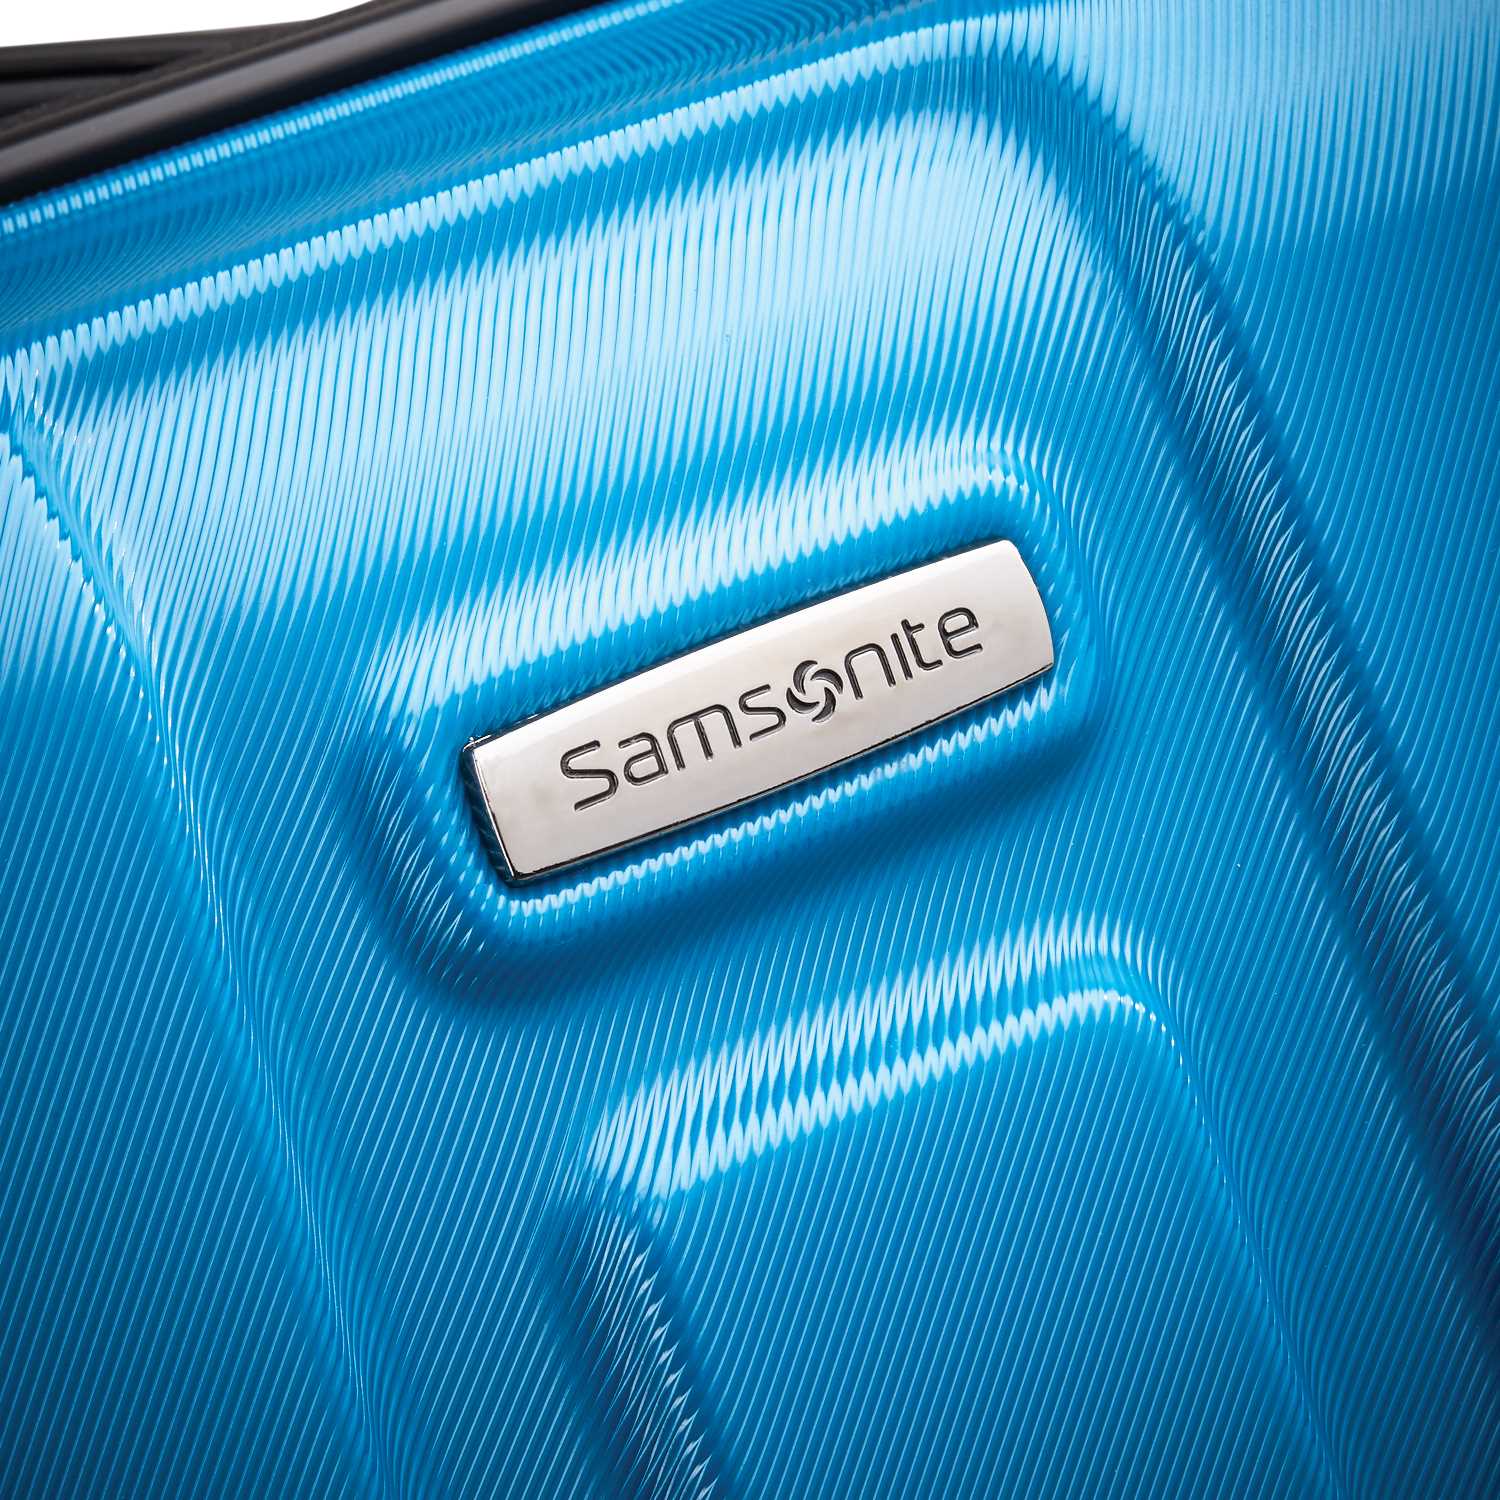 Samsonite Centric 2 3 Piece Set Luggage - Caribbean Blue